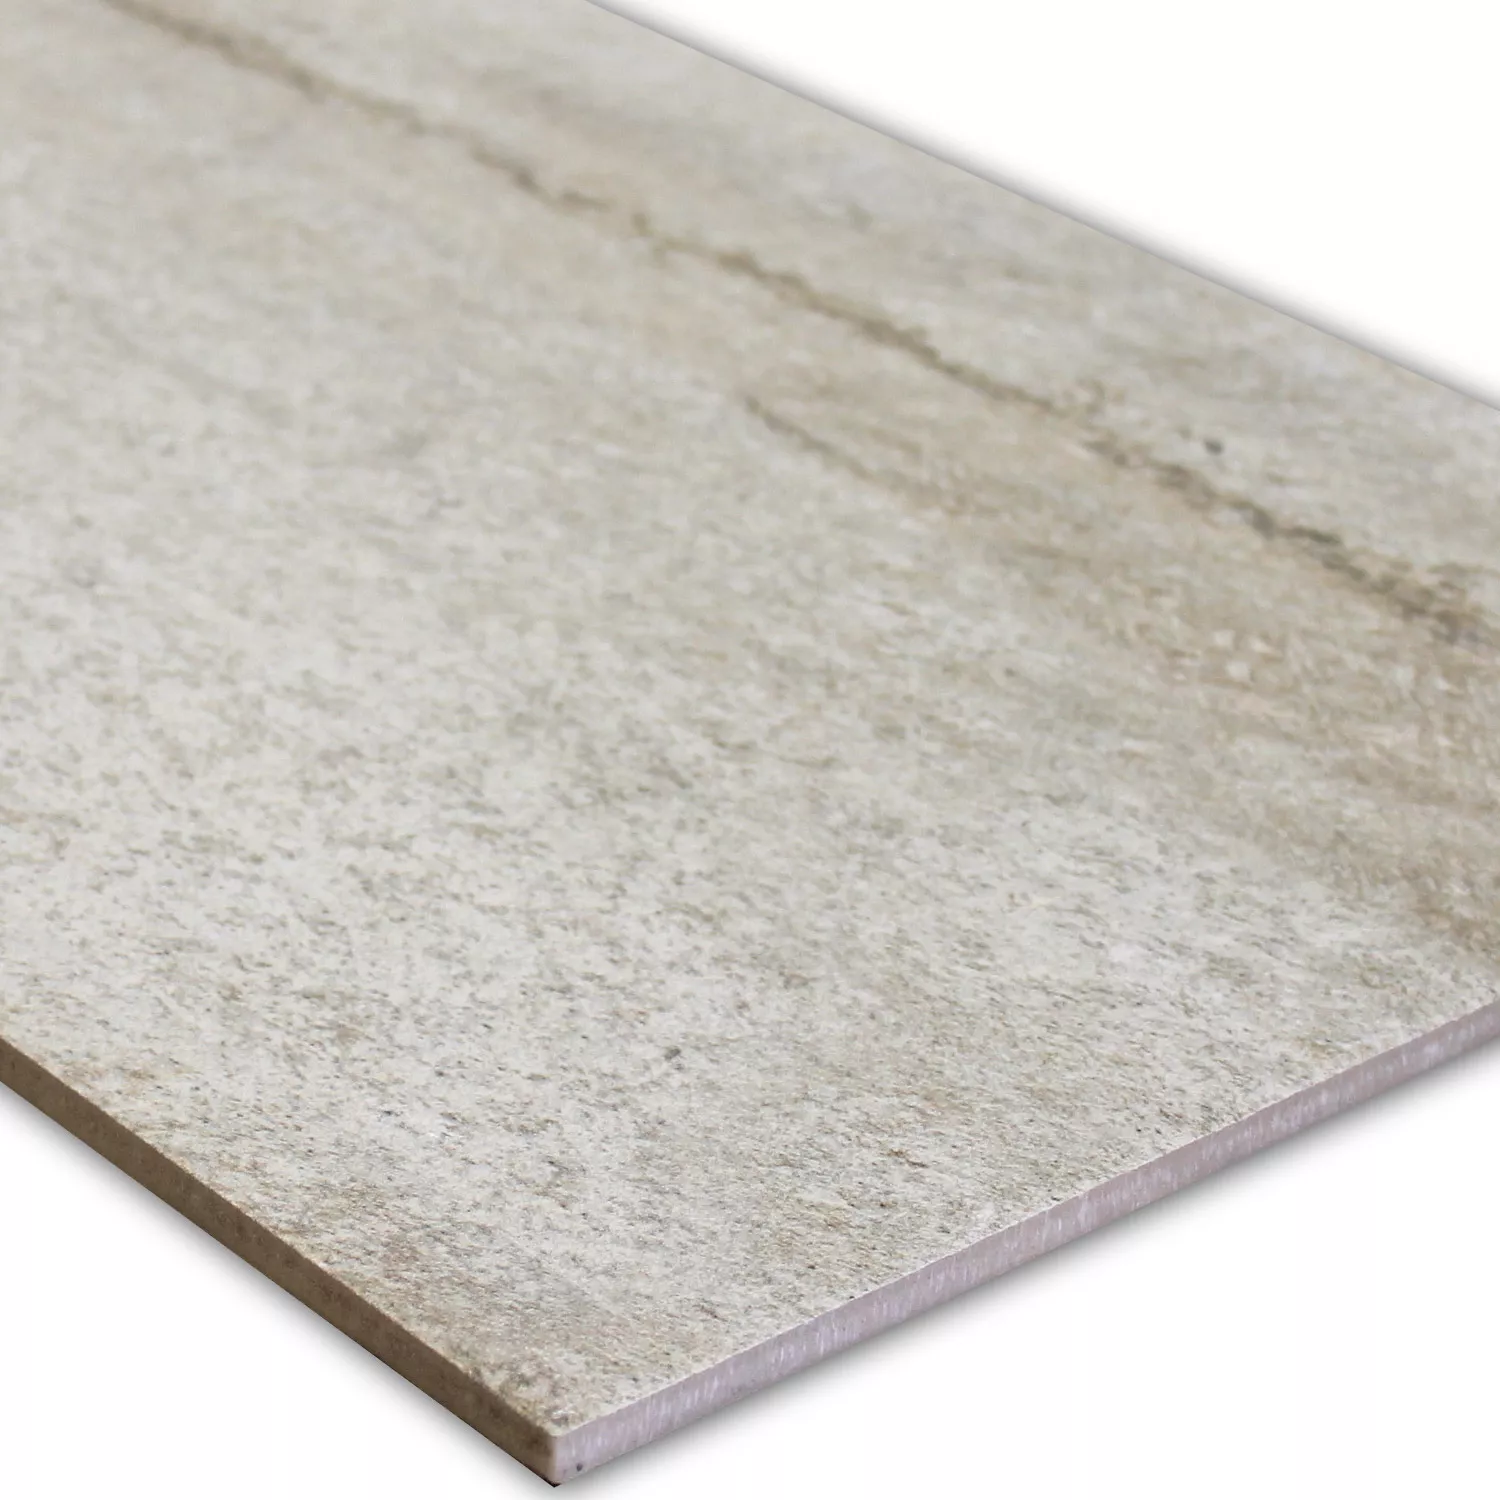 Sample Floor Tiles Natural Grey 31x62cm